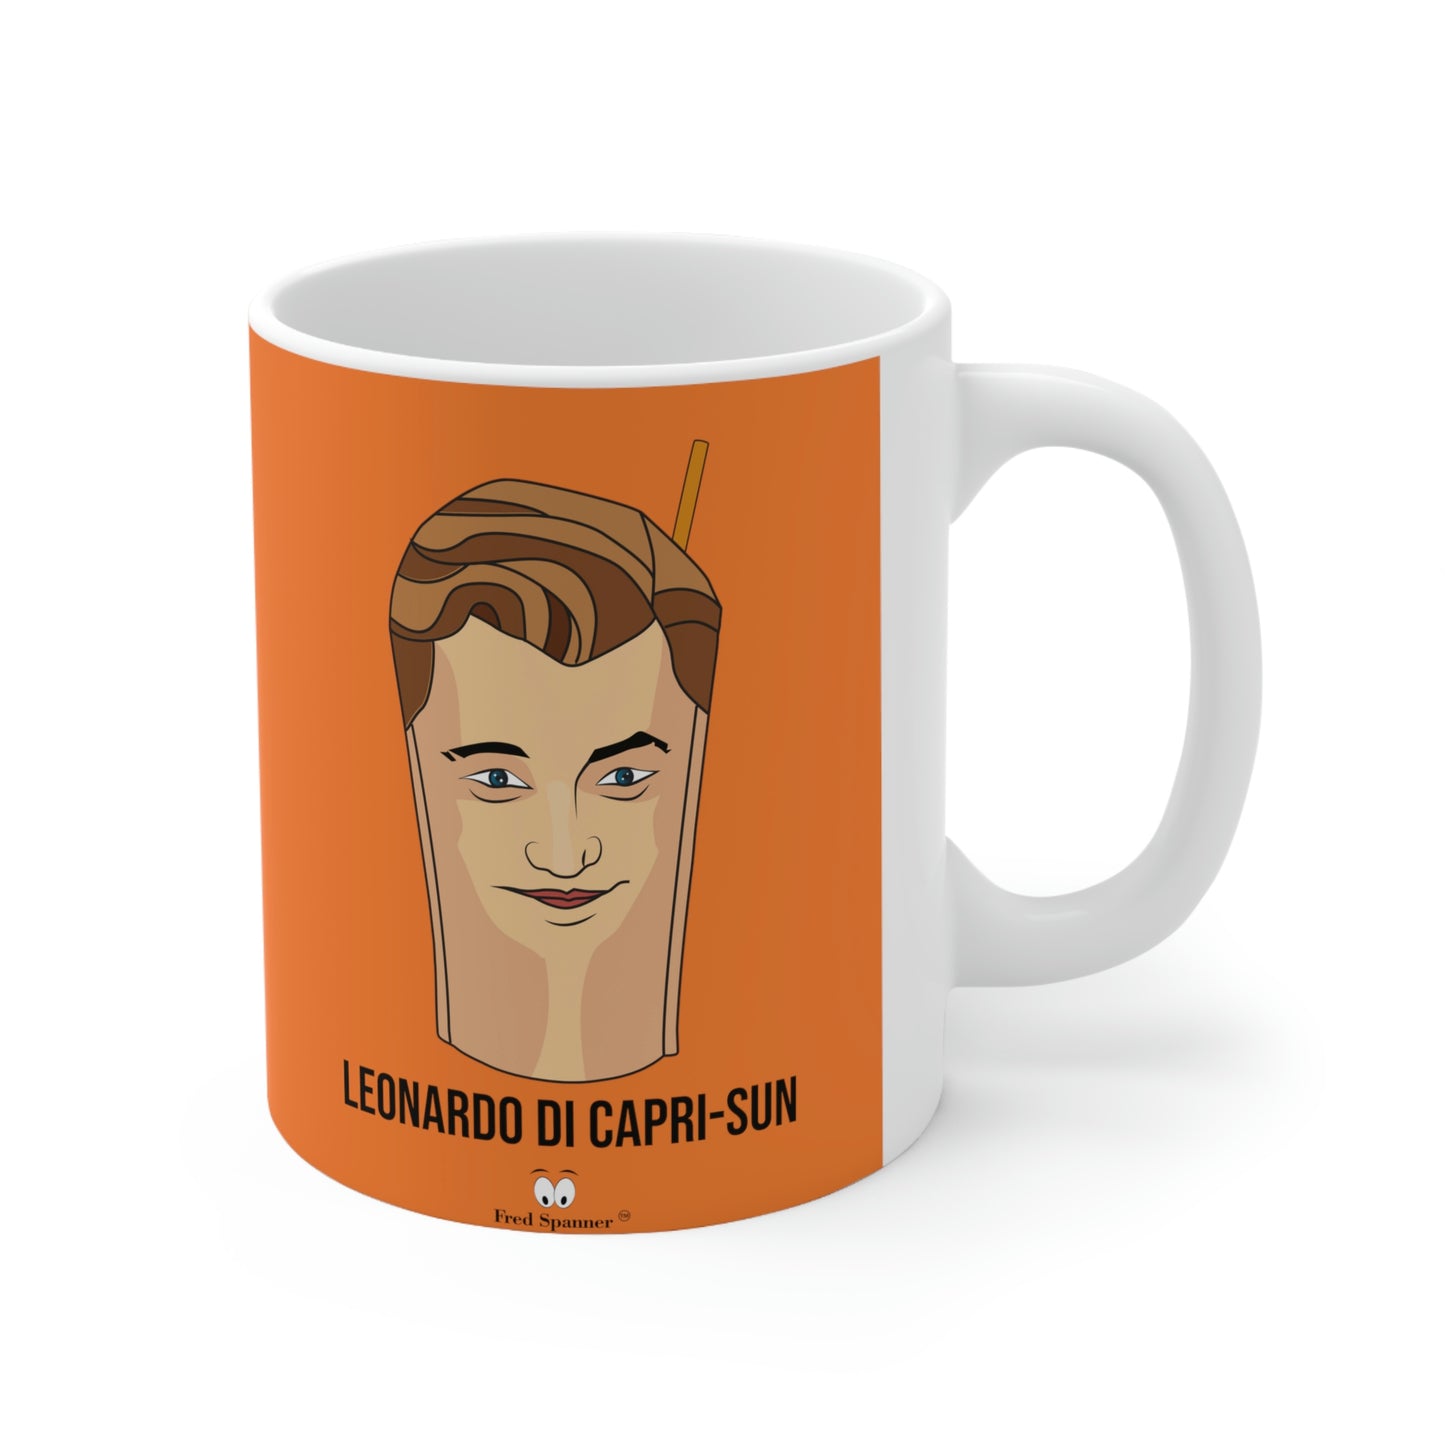 Leonardo Di Capri-Sun Ceramic Coffee Cup